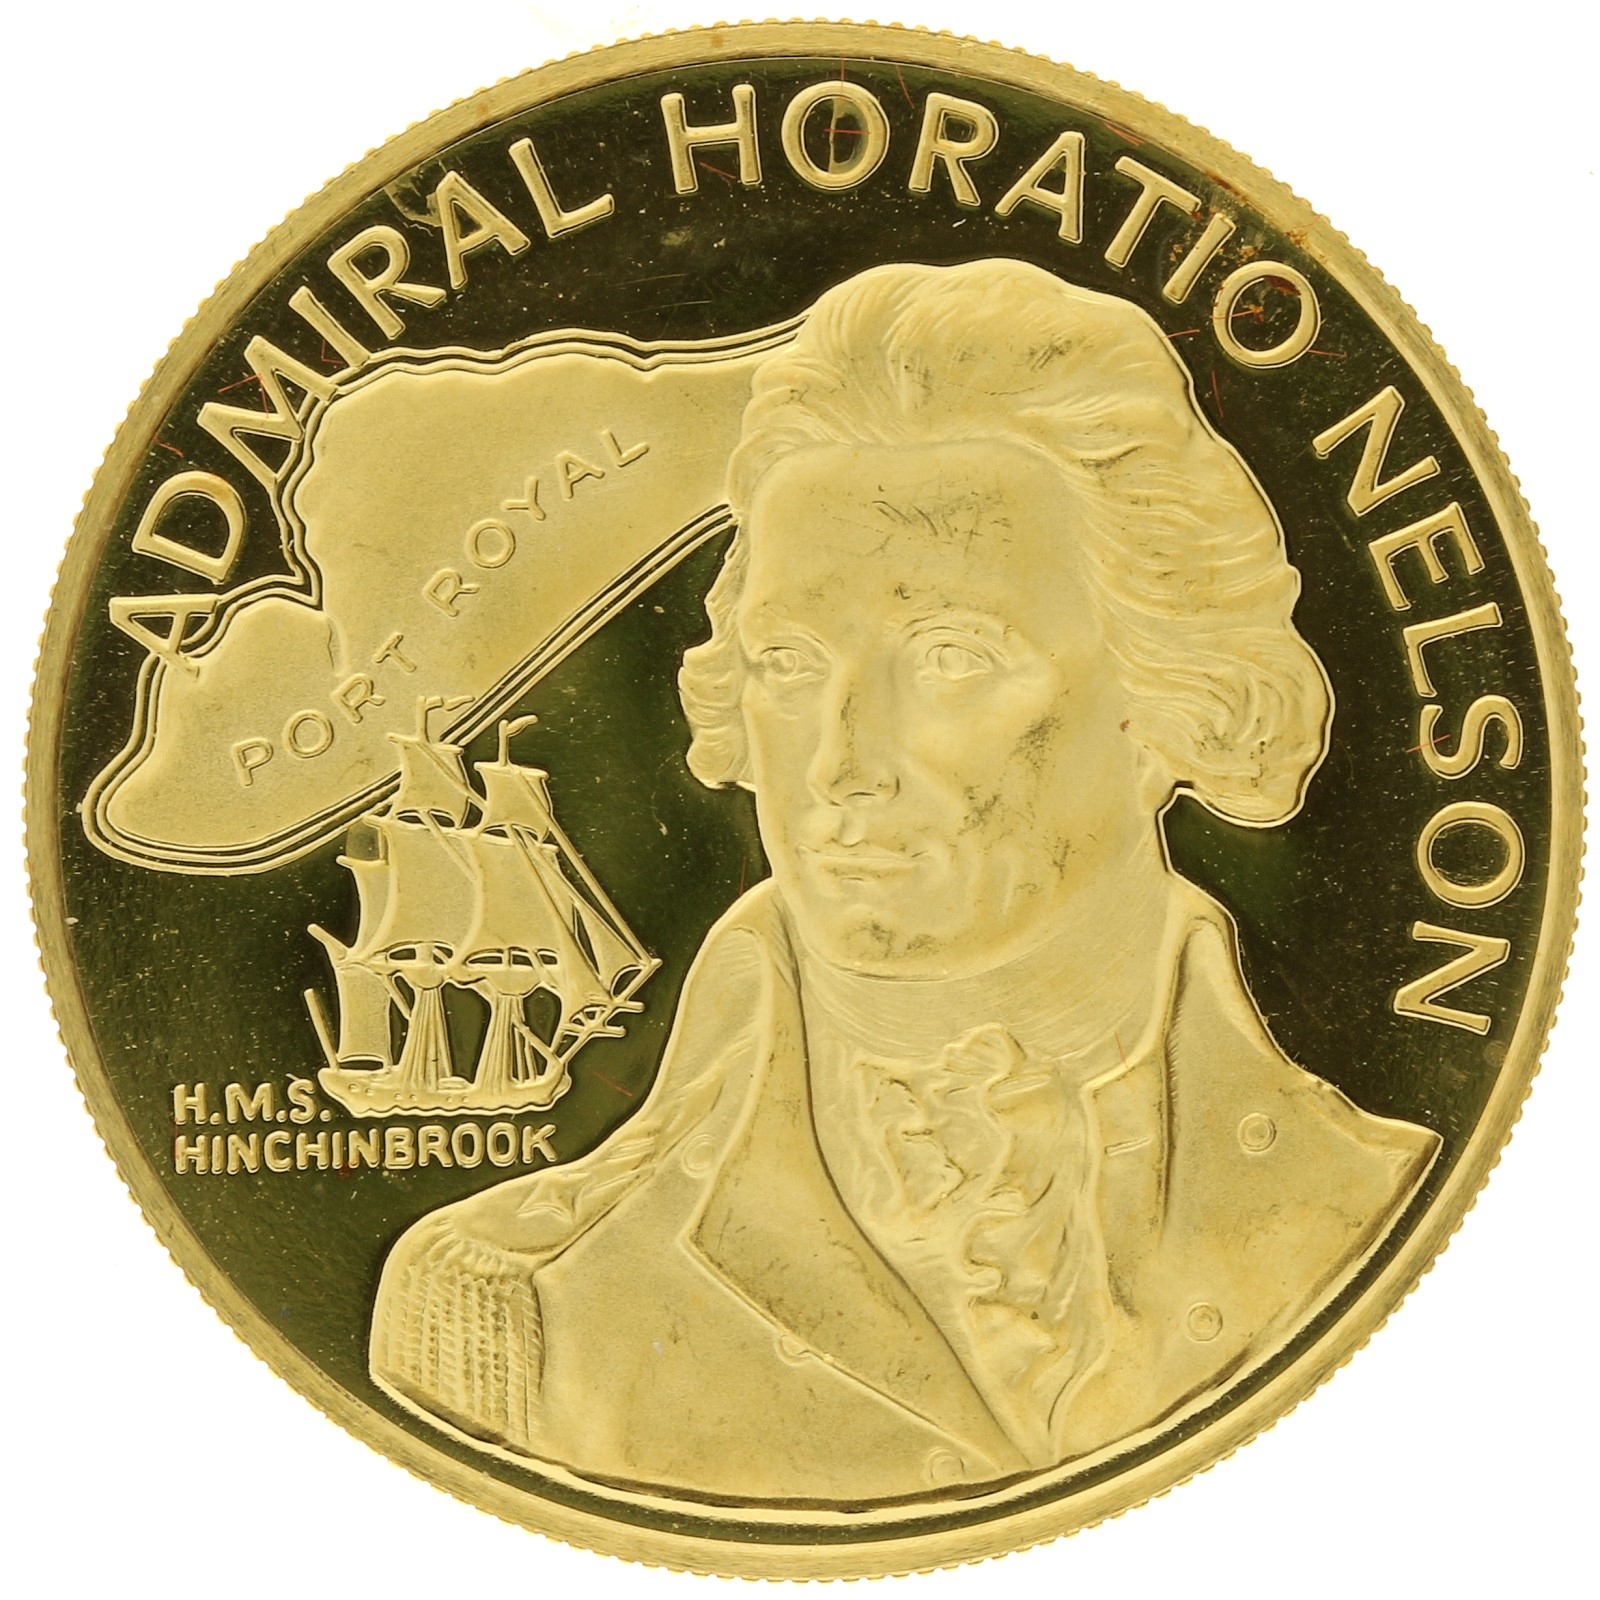 Jamaica - 100 Dollars - 1976 - Admiral Horatio Nelson